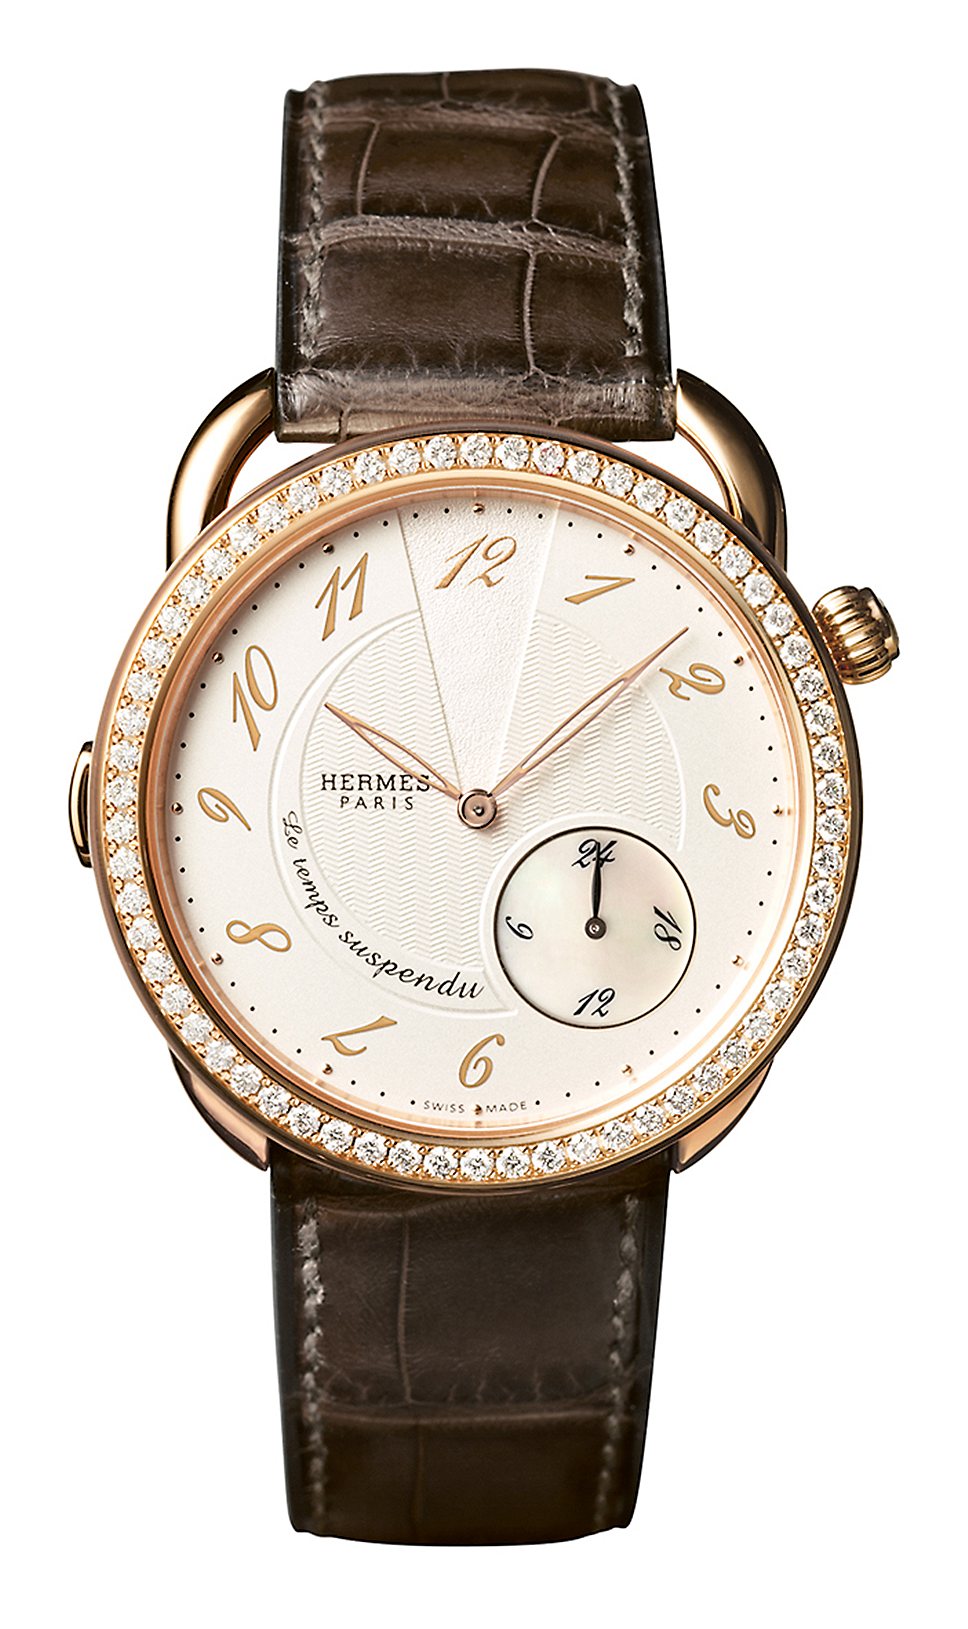 Часы Hermes, Arceau Le Temps Suspendu 